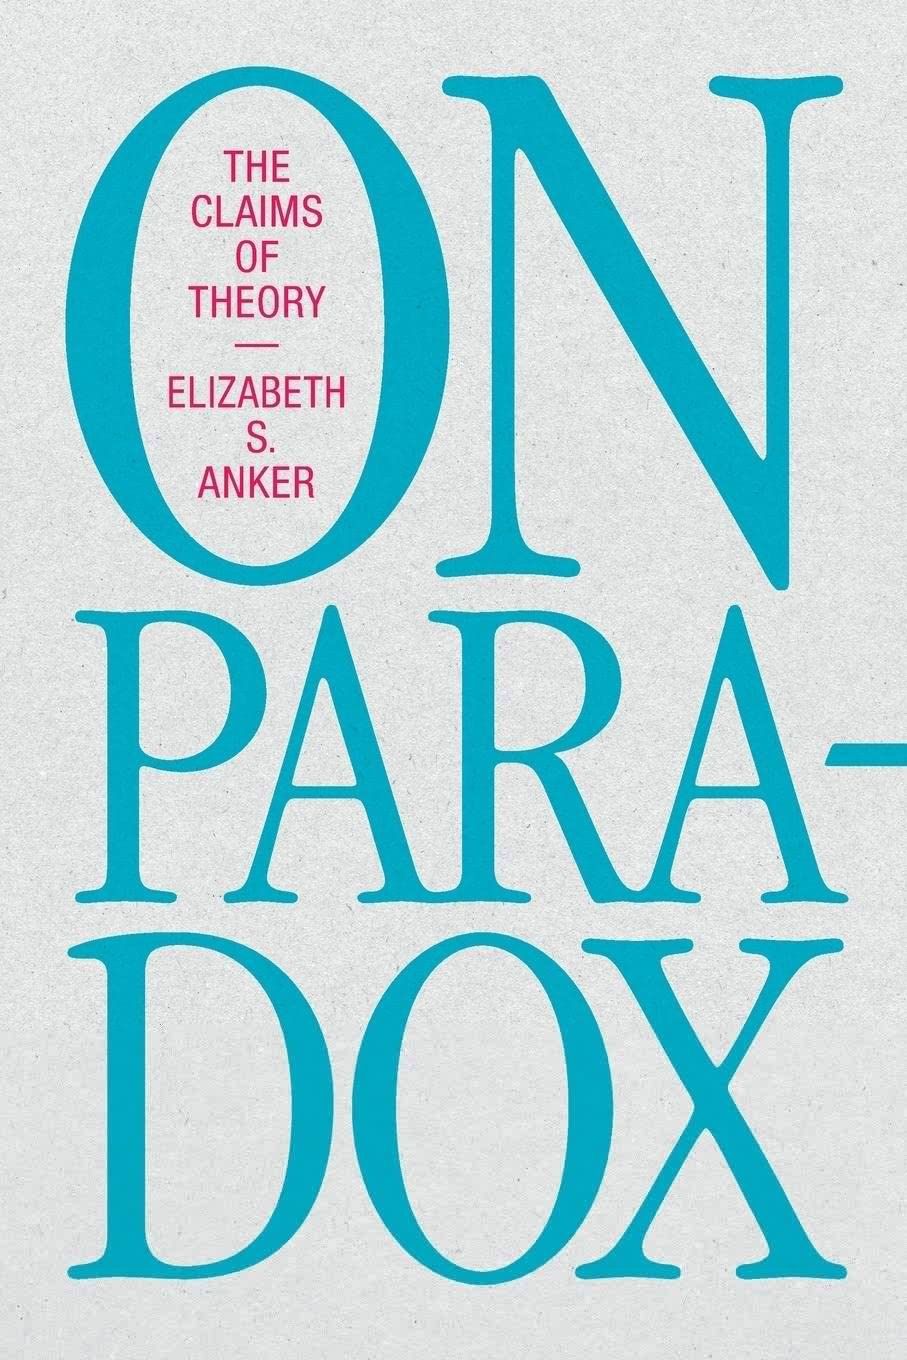 The Paradox Paradox: On Elizabeth S. Anker’s “On Paradox”